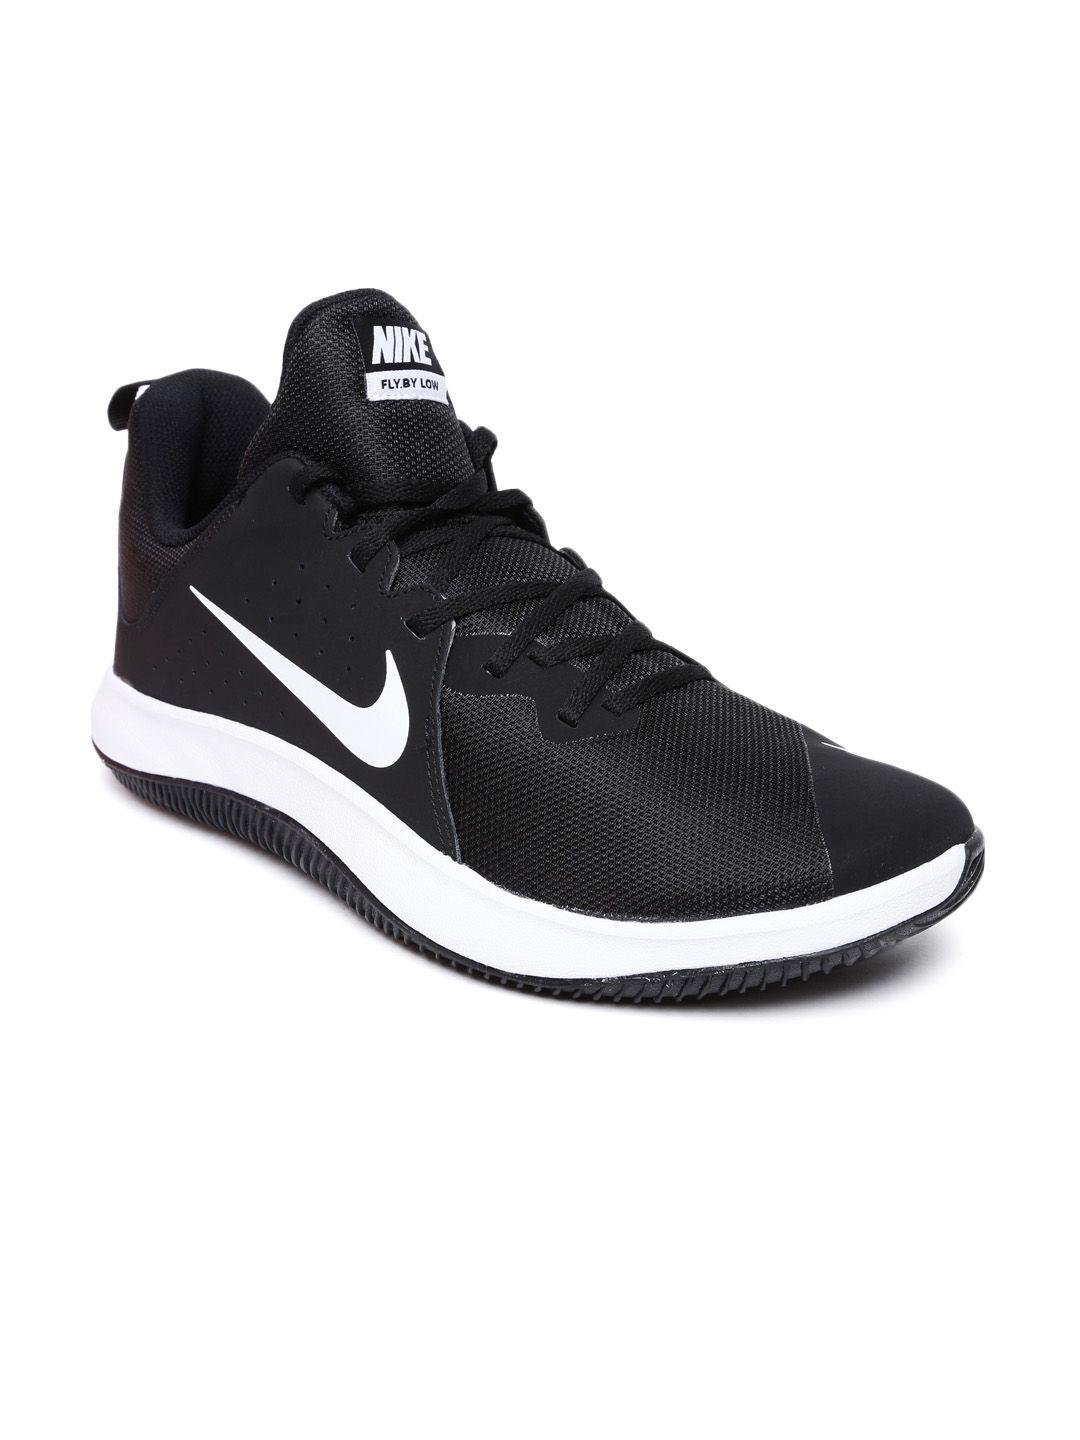 Black and White Shoe Logo - Nike Shoes Nike Shoes for Men & Women Online